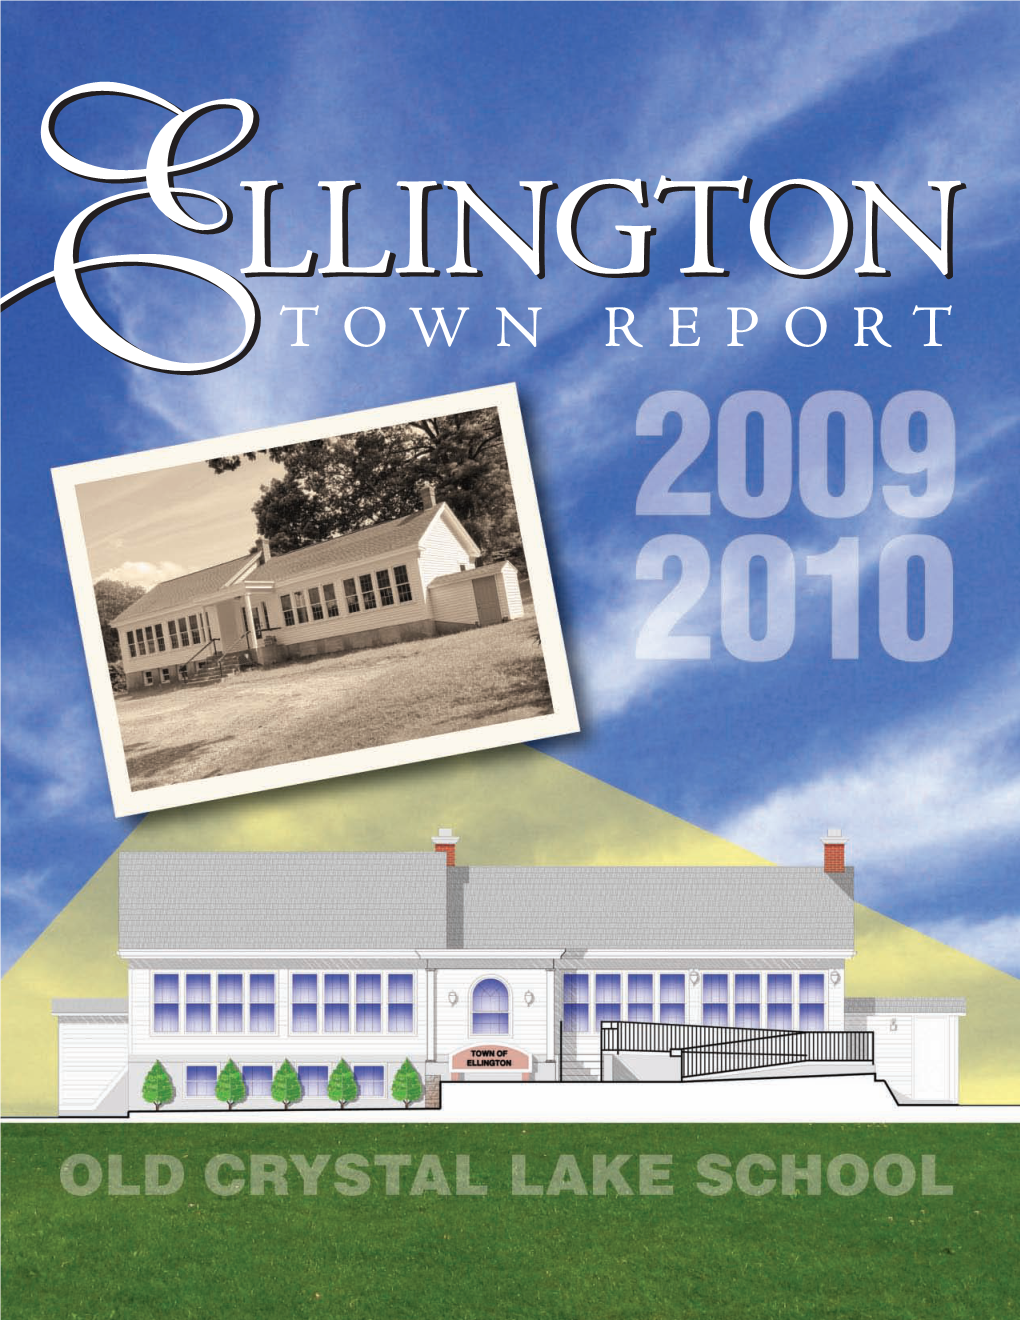 Town Report Llington Highlights